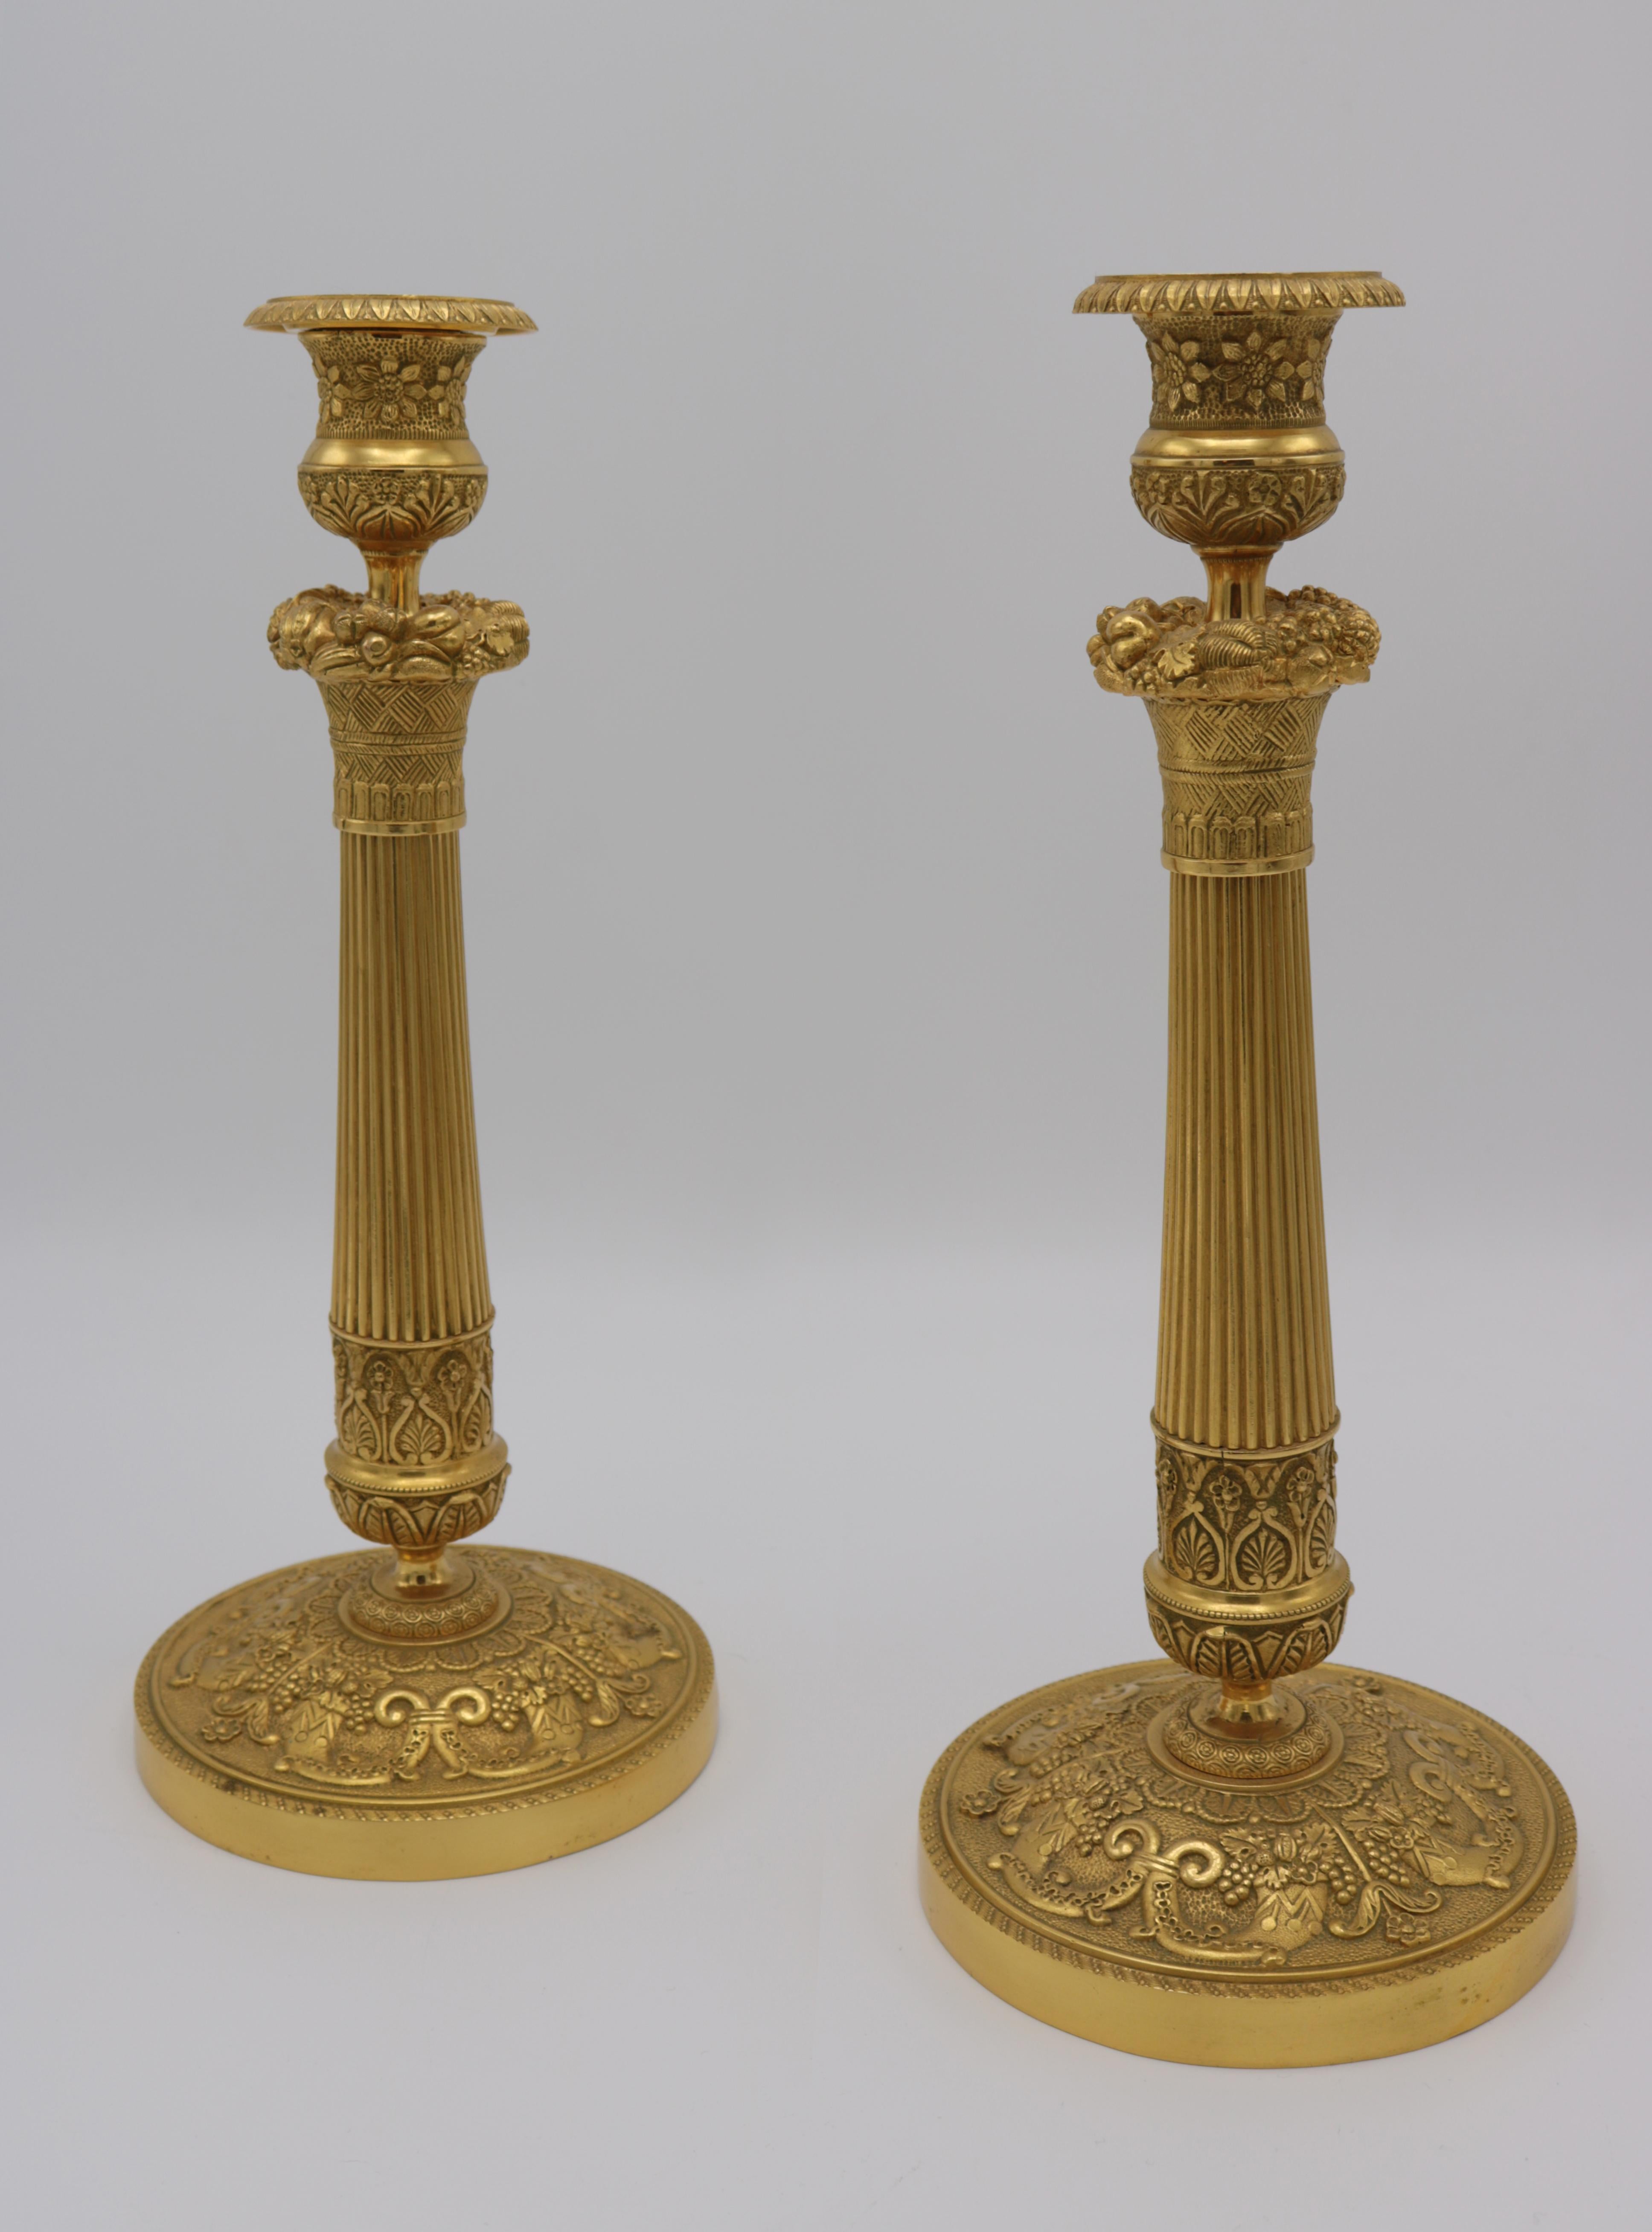 A fine pair of Empire Ormolou candlesticks.